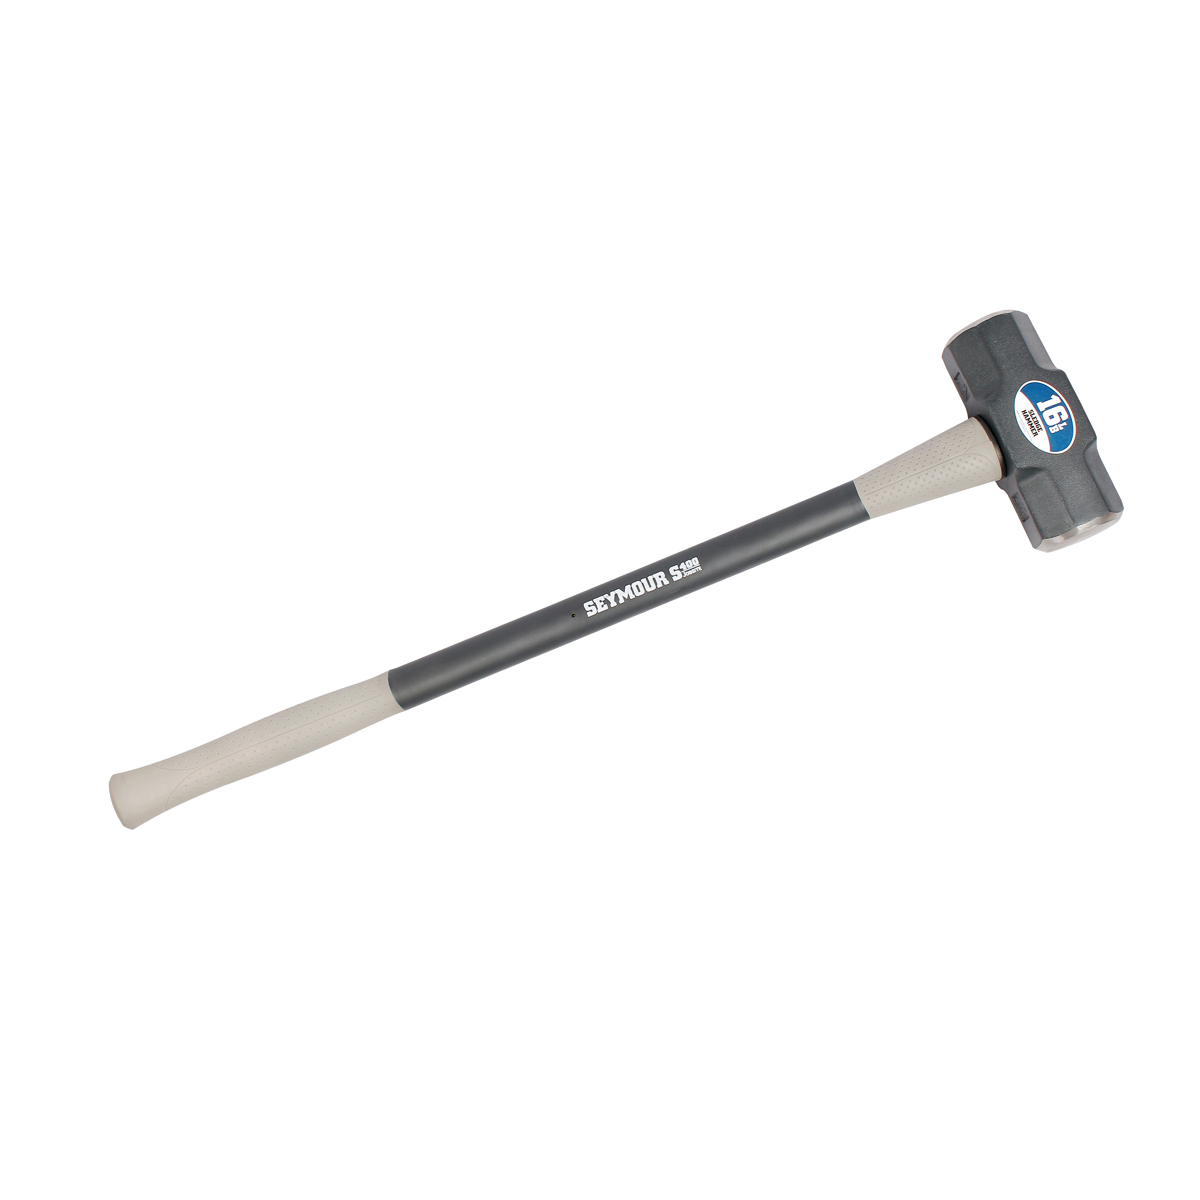 Professional Locksmith Hammer 1500 Size Workshop Hammer Sledgehammer Fibreglass xt036 